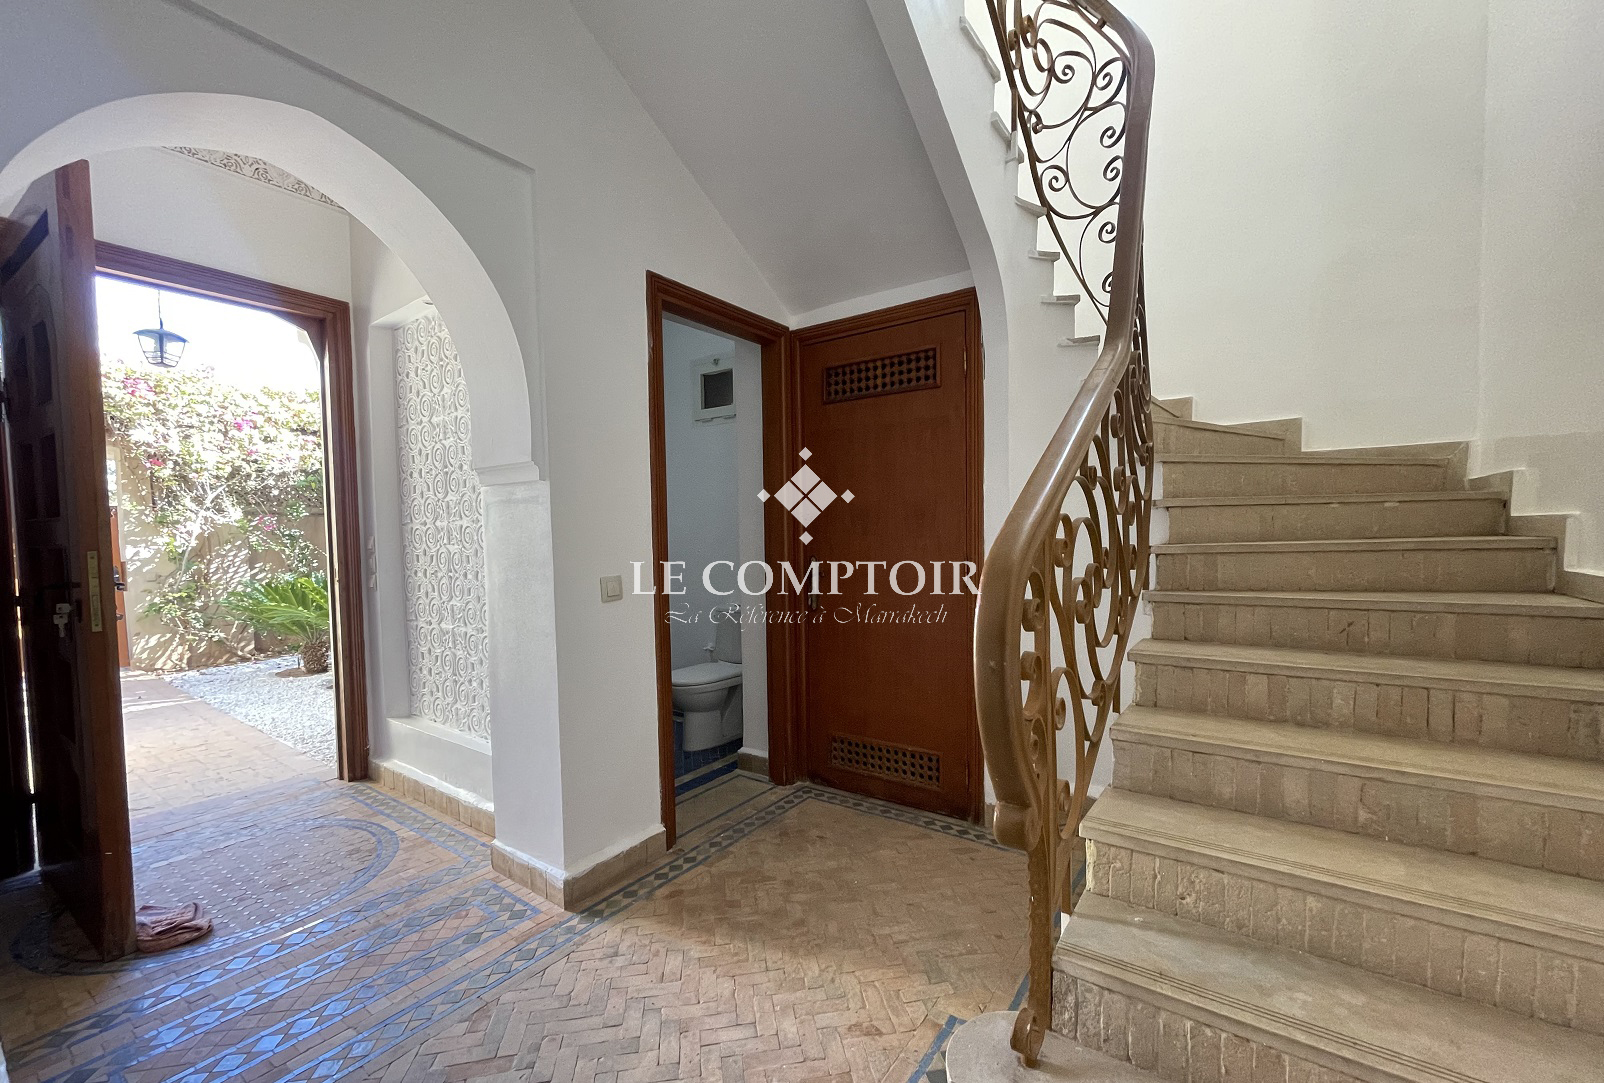 Le Comptoir Immobilier Agence Immobiliere Marrakech Villa Residence Non Meublee Location Marakech Maroc Piscine 10 2